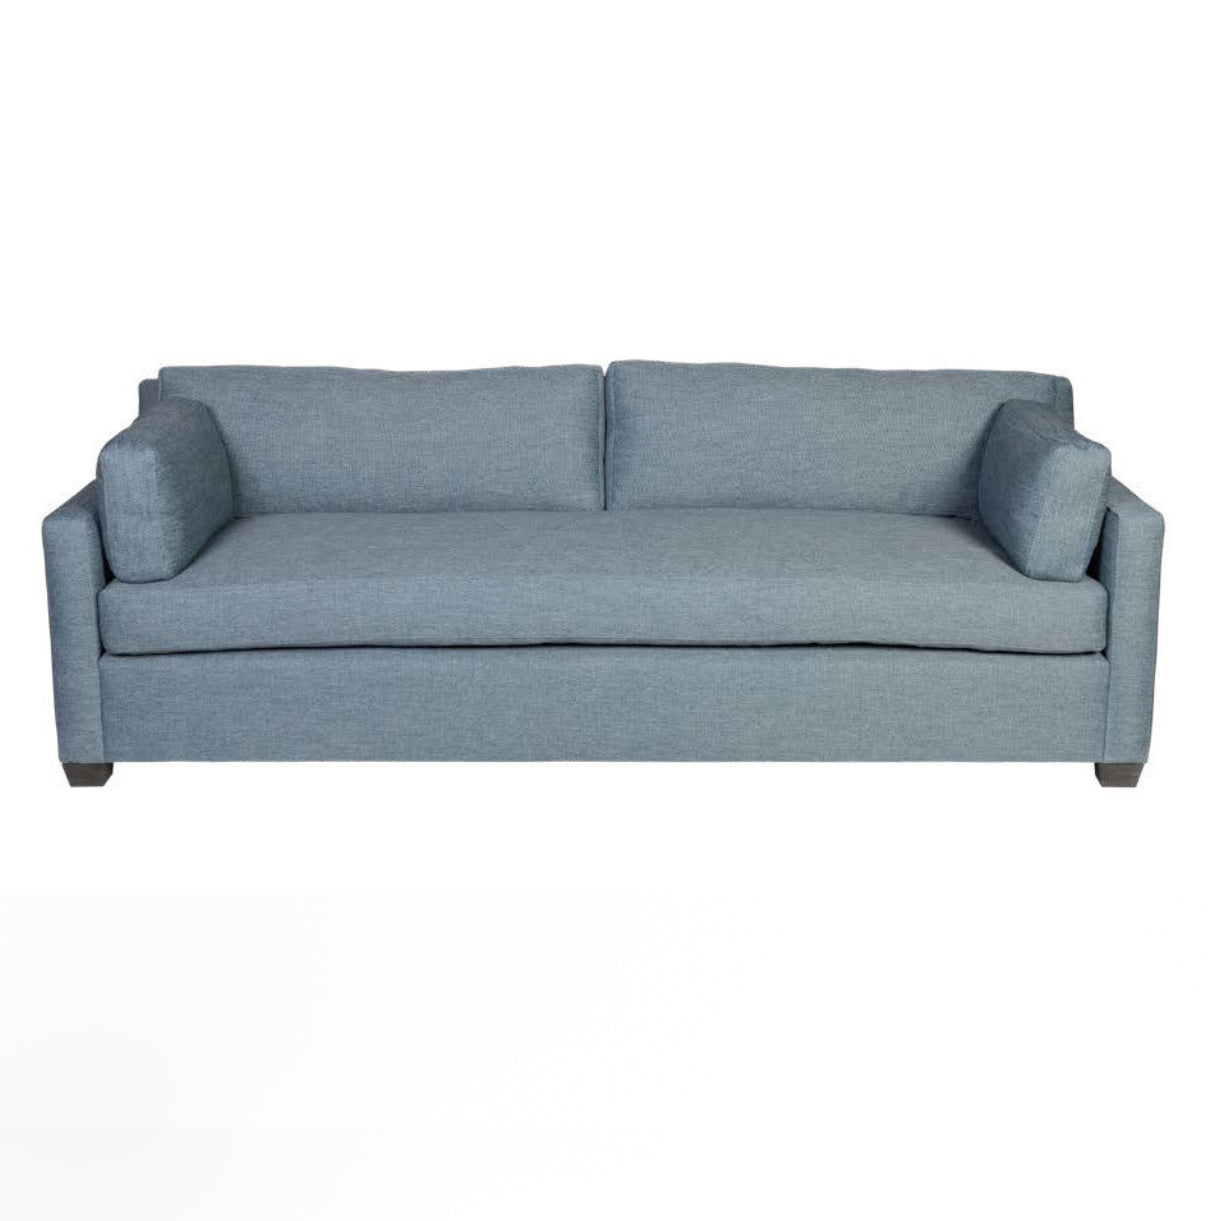 upholstered amanda sofa WH & Co. 